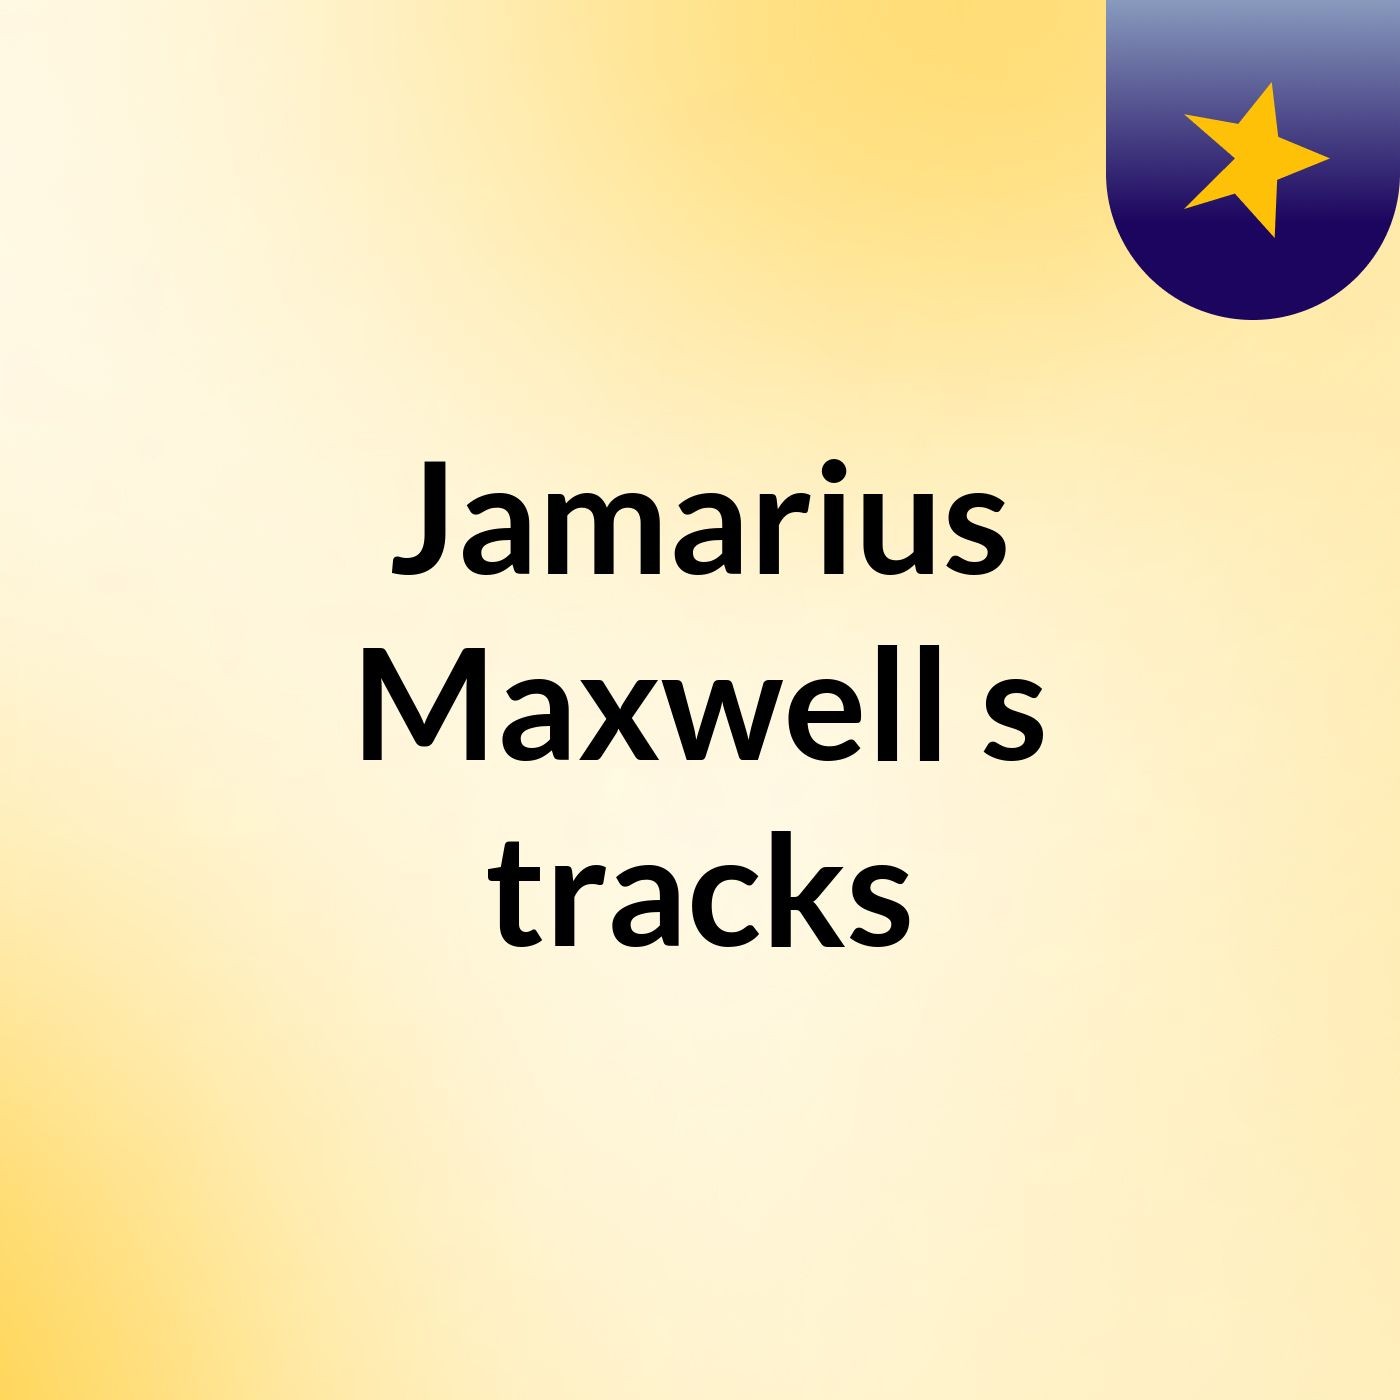 Jamarius Maxwell's tracks